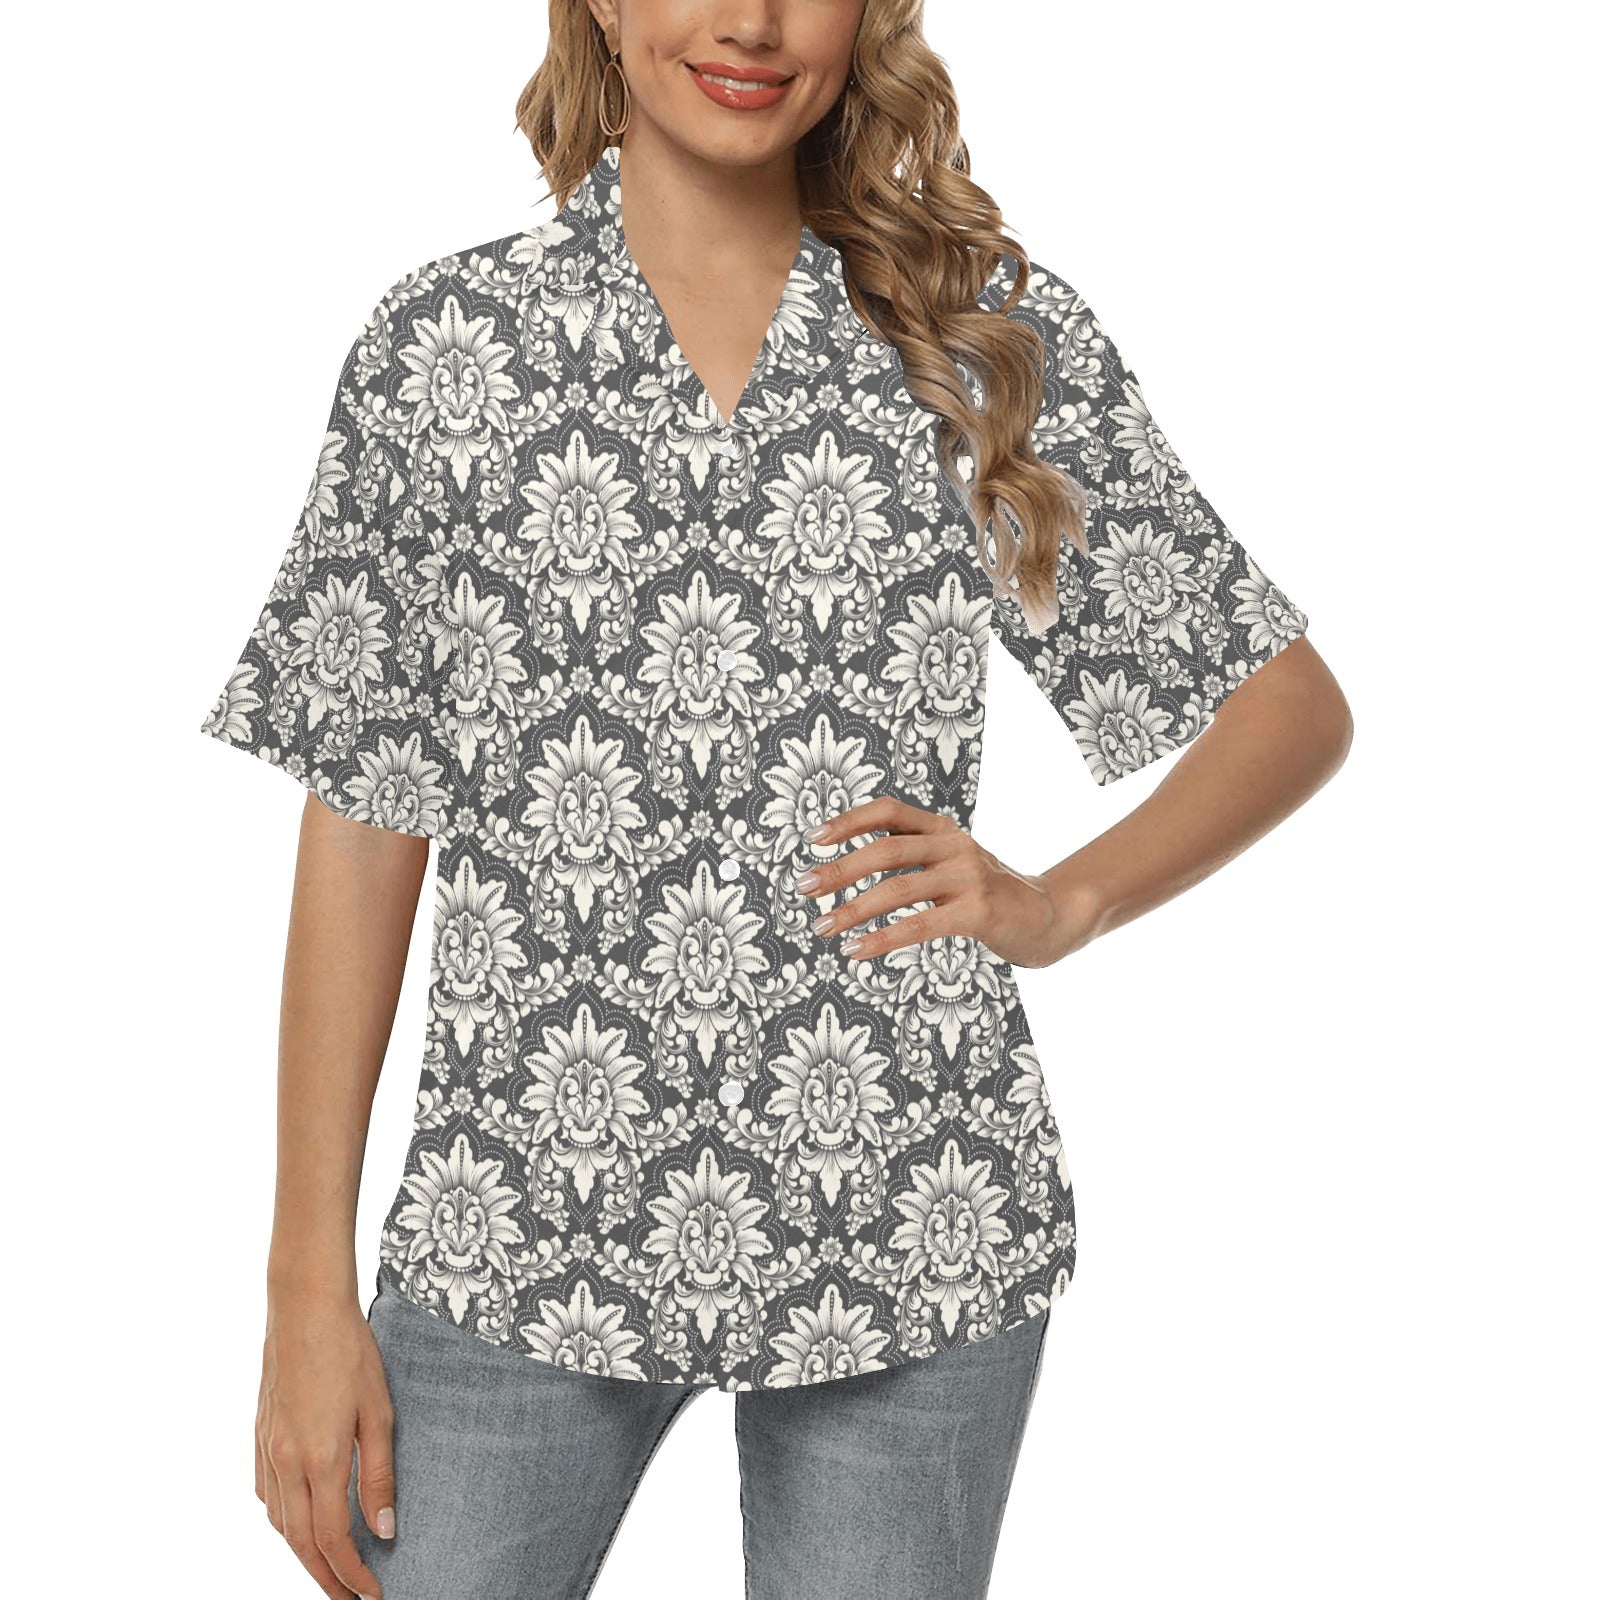 Damask Elegant Print Pattern Women's Hawaiian Shirt